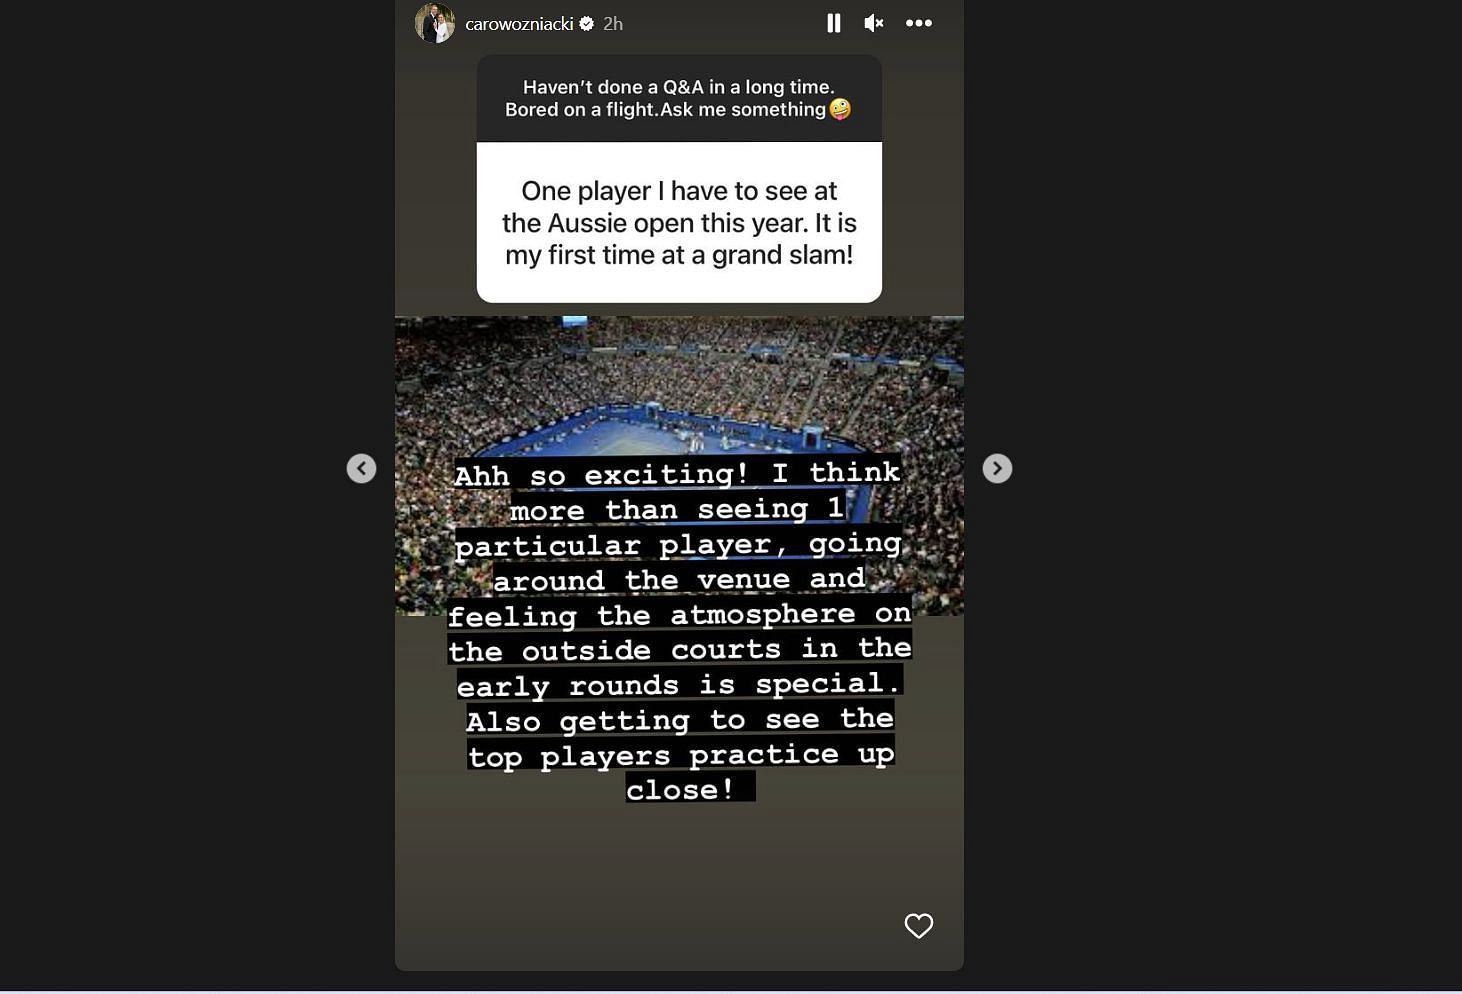 Via Instagram - Caroline Wozniacki shares her favorite part about the Australian Open.